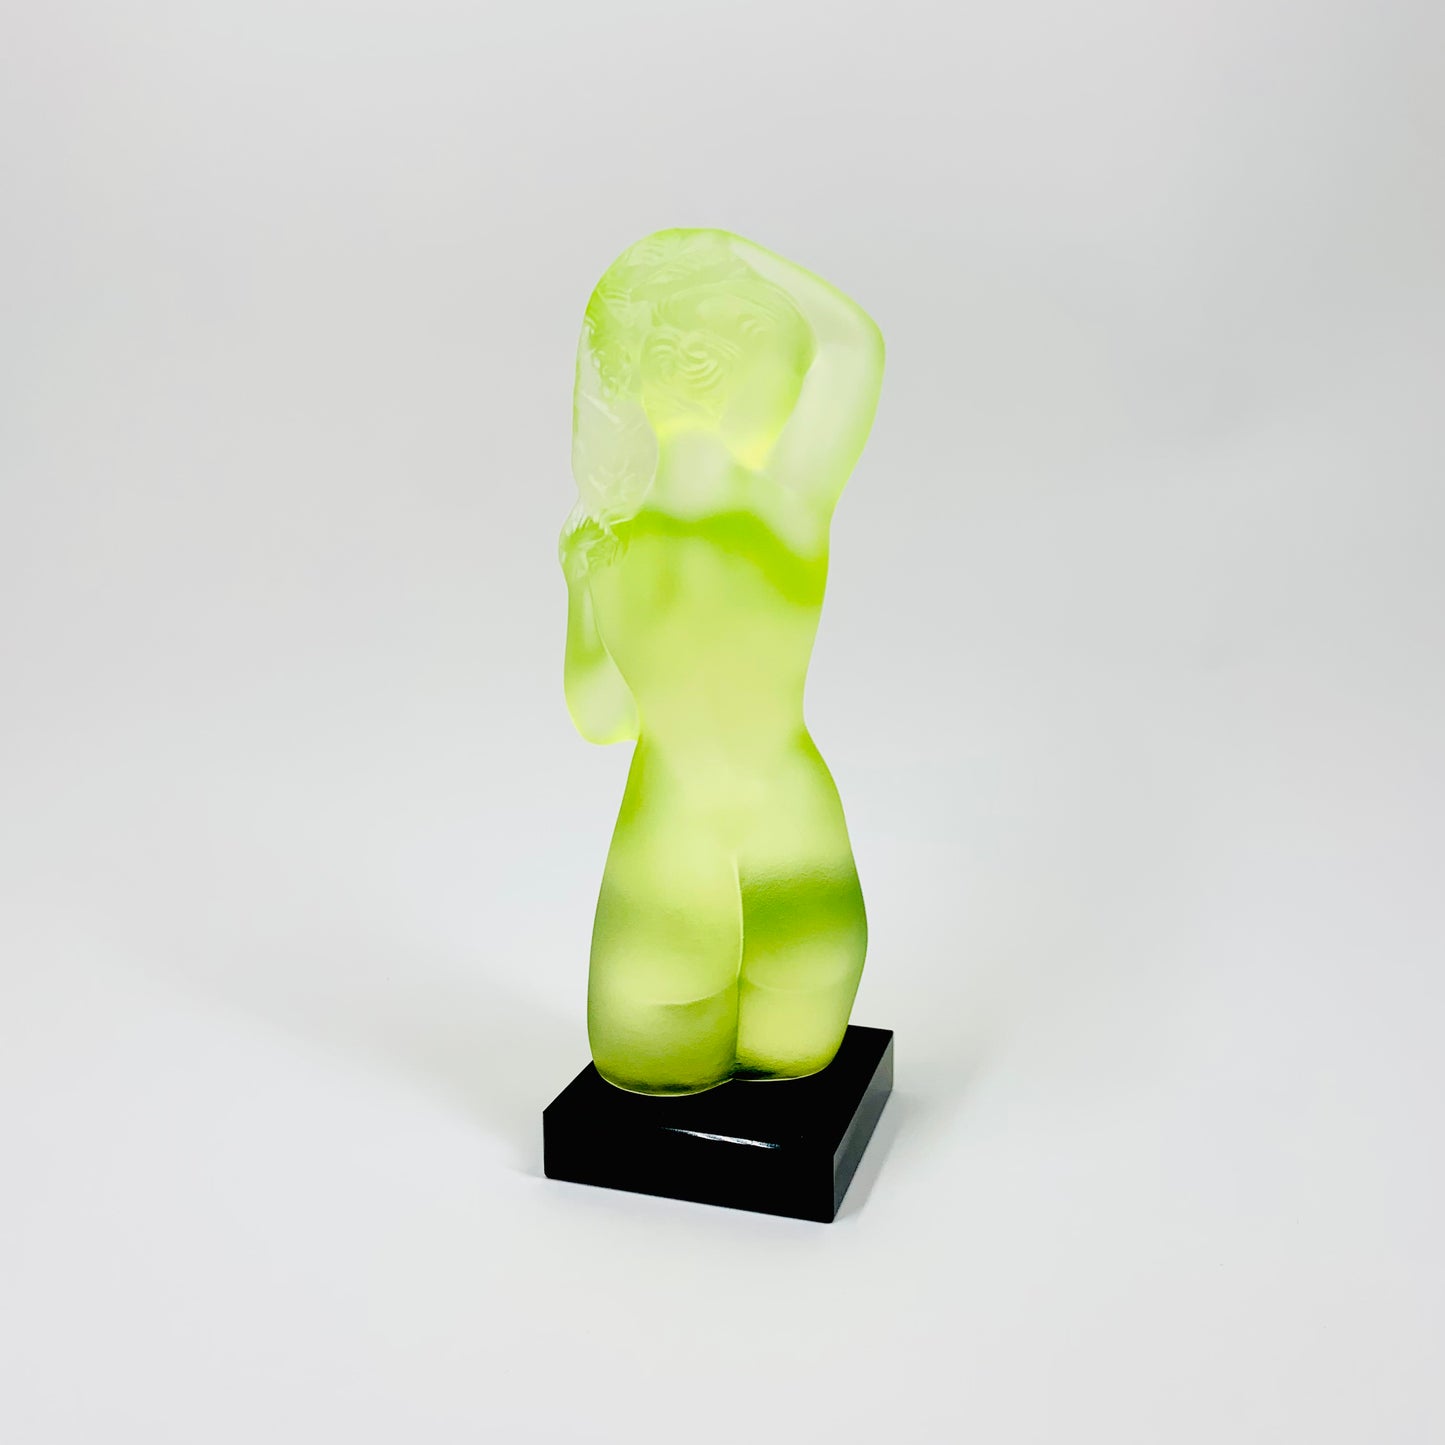 Art Deco reproduction of Lalique Venus figurine in uranium glass on black marble stand